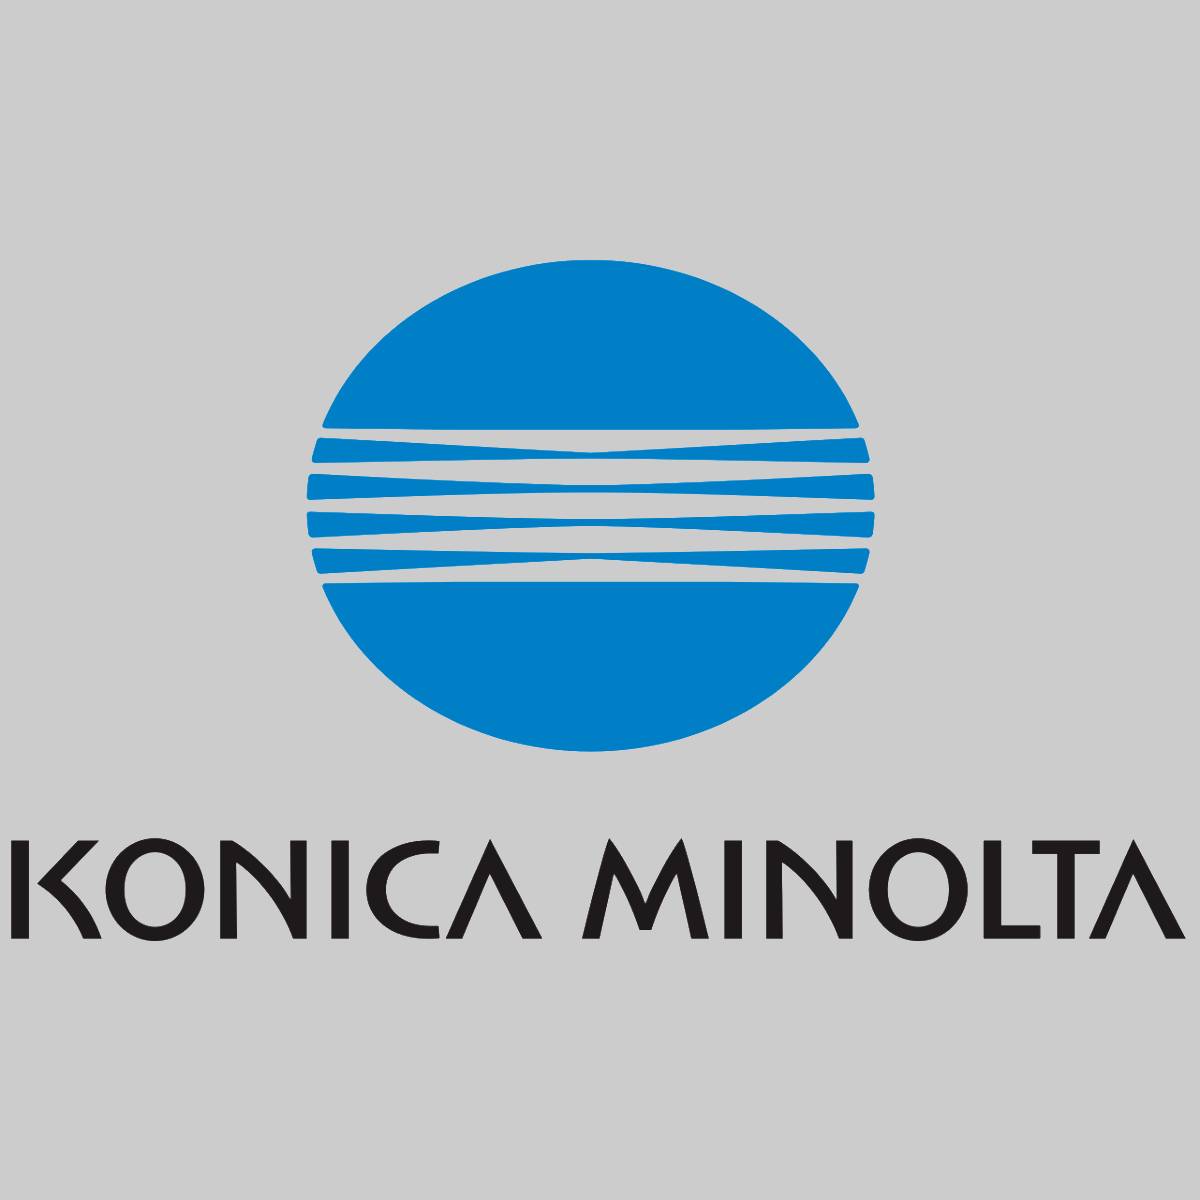 "Original Konica Minolta Schwarz (Black) Toner A0FP022 für PagePro 5600 Series